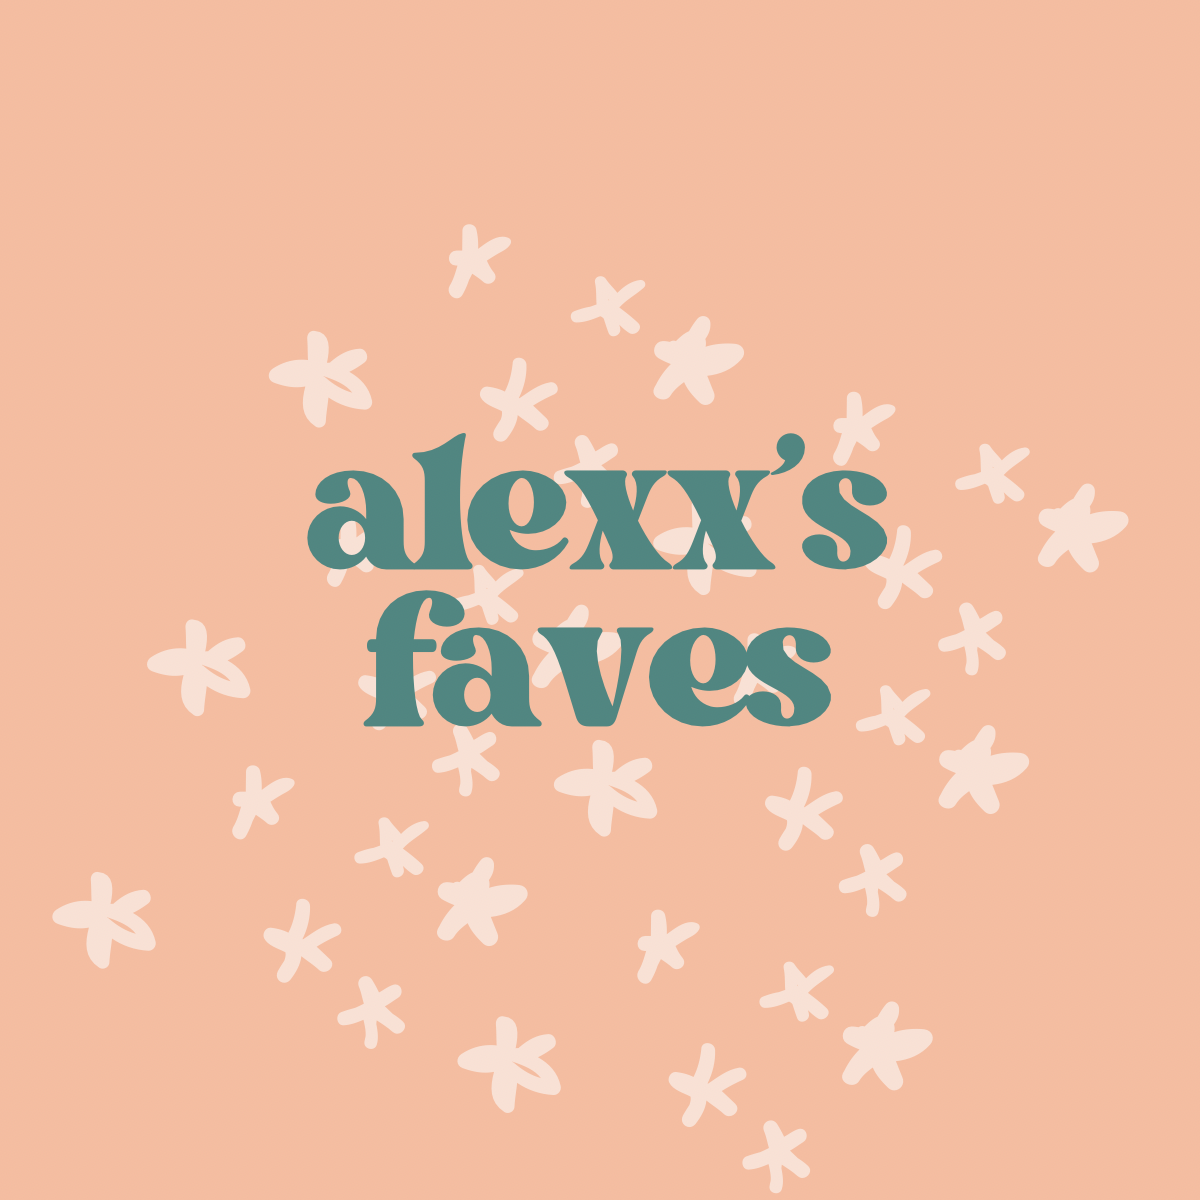 Alexx's Faves